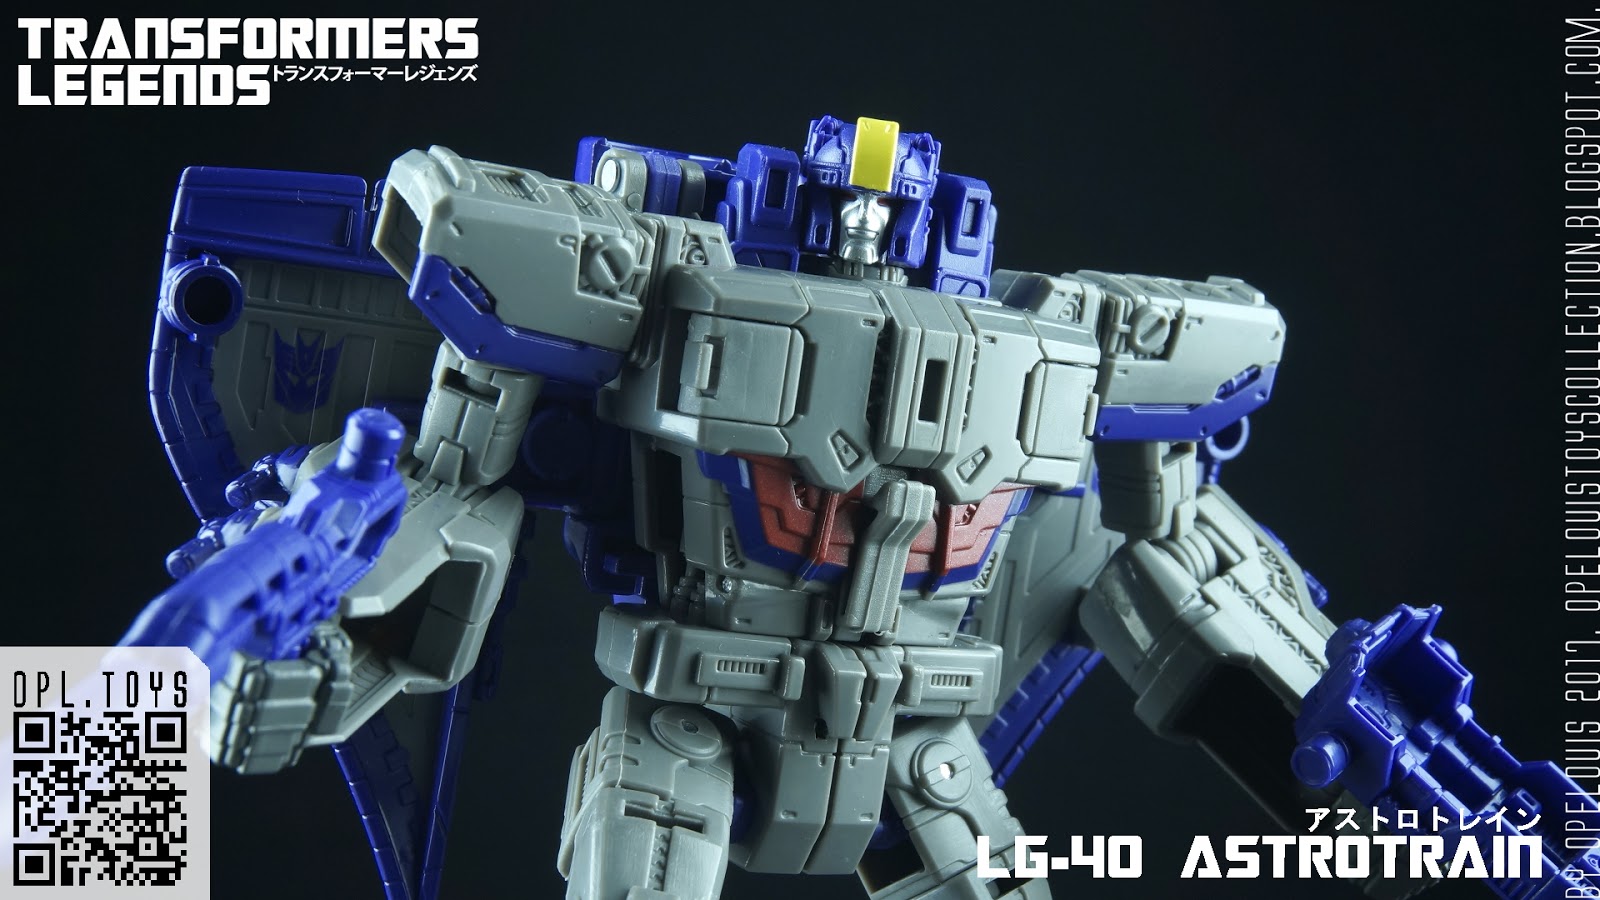 NEW! Takara Tomy Transformers Legends LG40 Astrorain from Japan F/S 